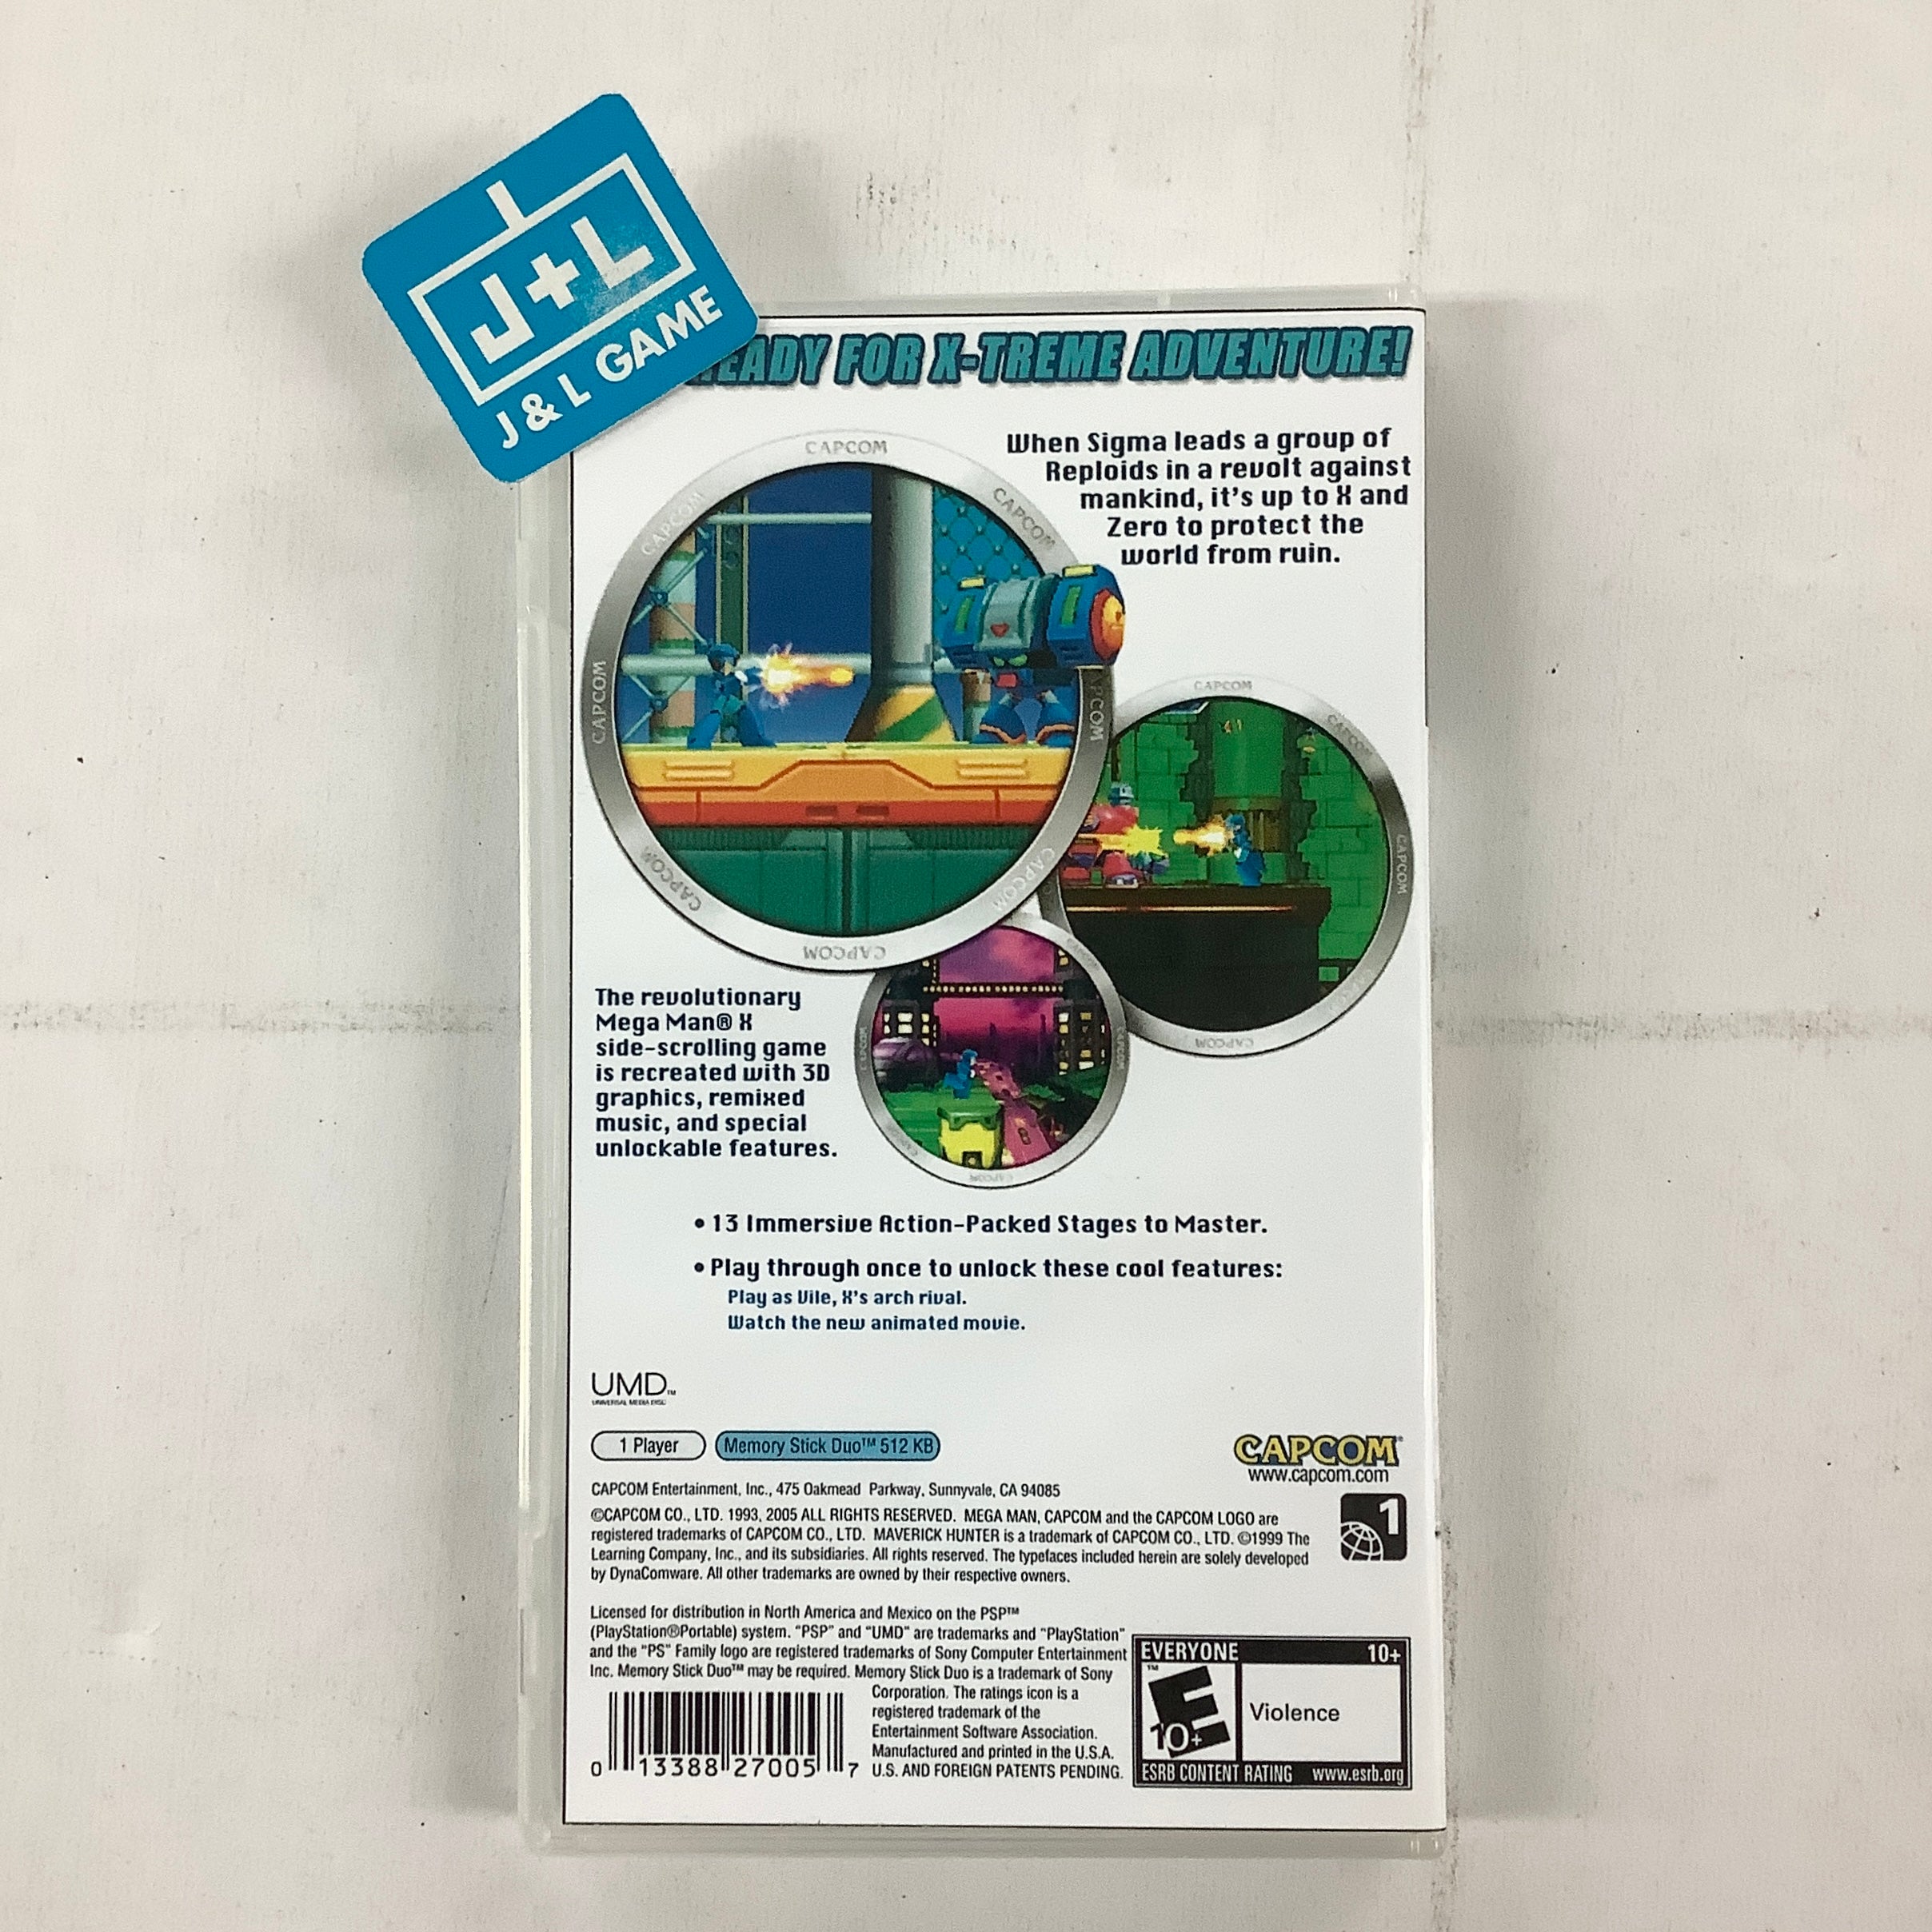 Mega Man Maverick Hunter X - Sony PSP [Pre-Owned] Video Games Capcom   